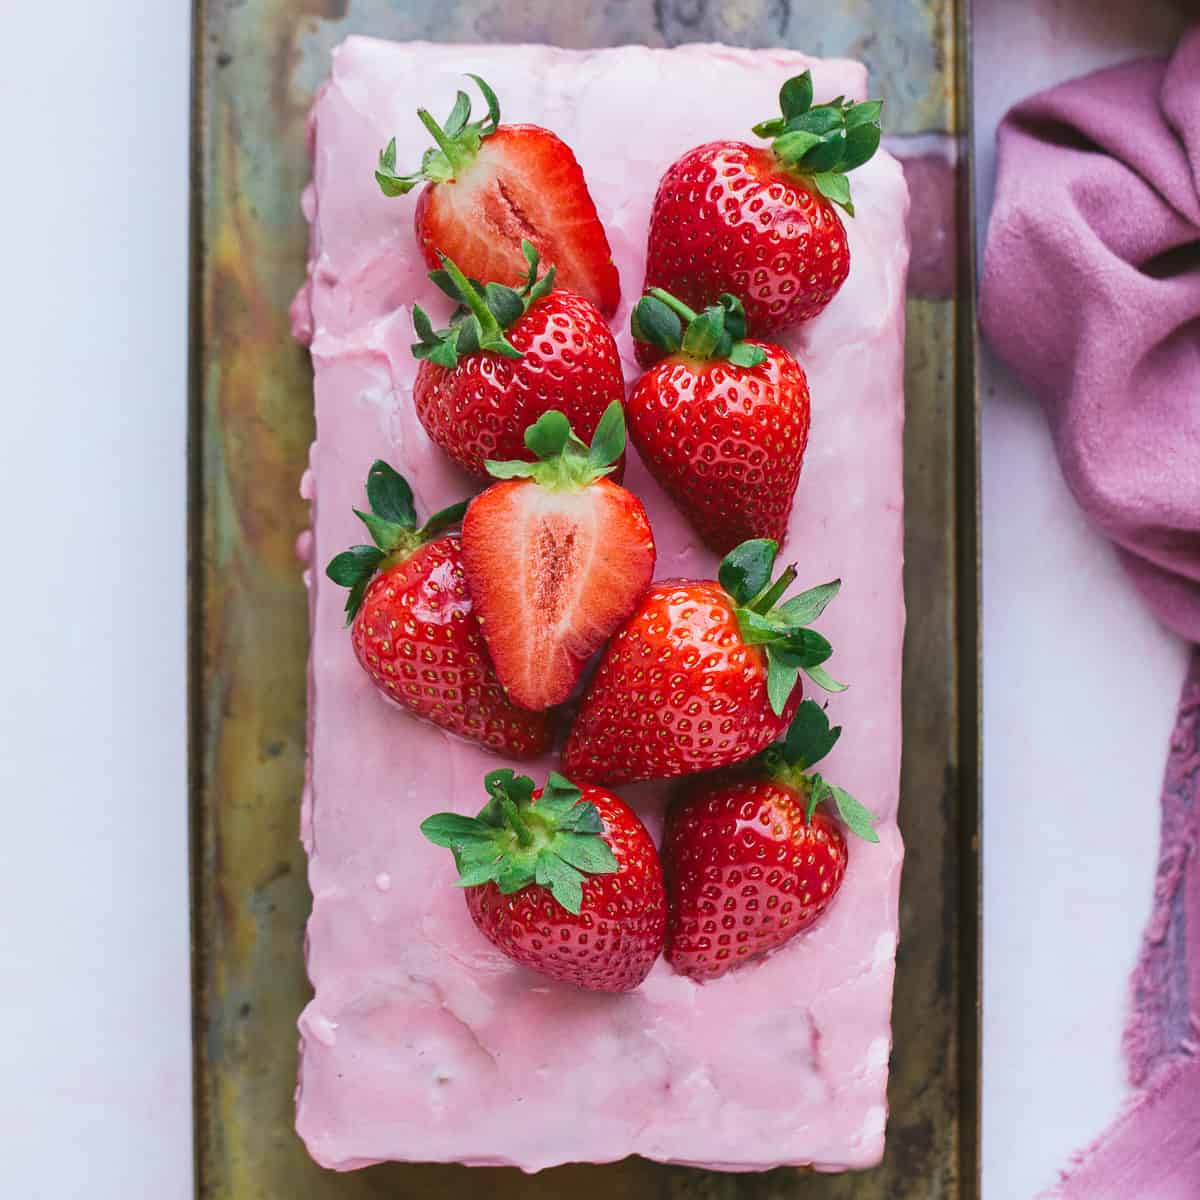 A strawberry loaf cake with a pink coloured glaze.